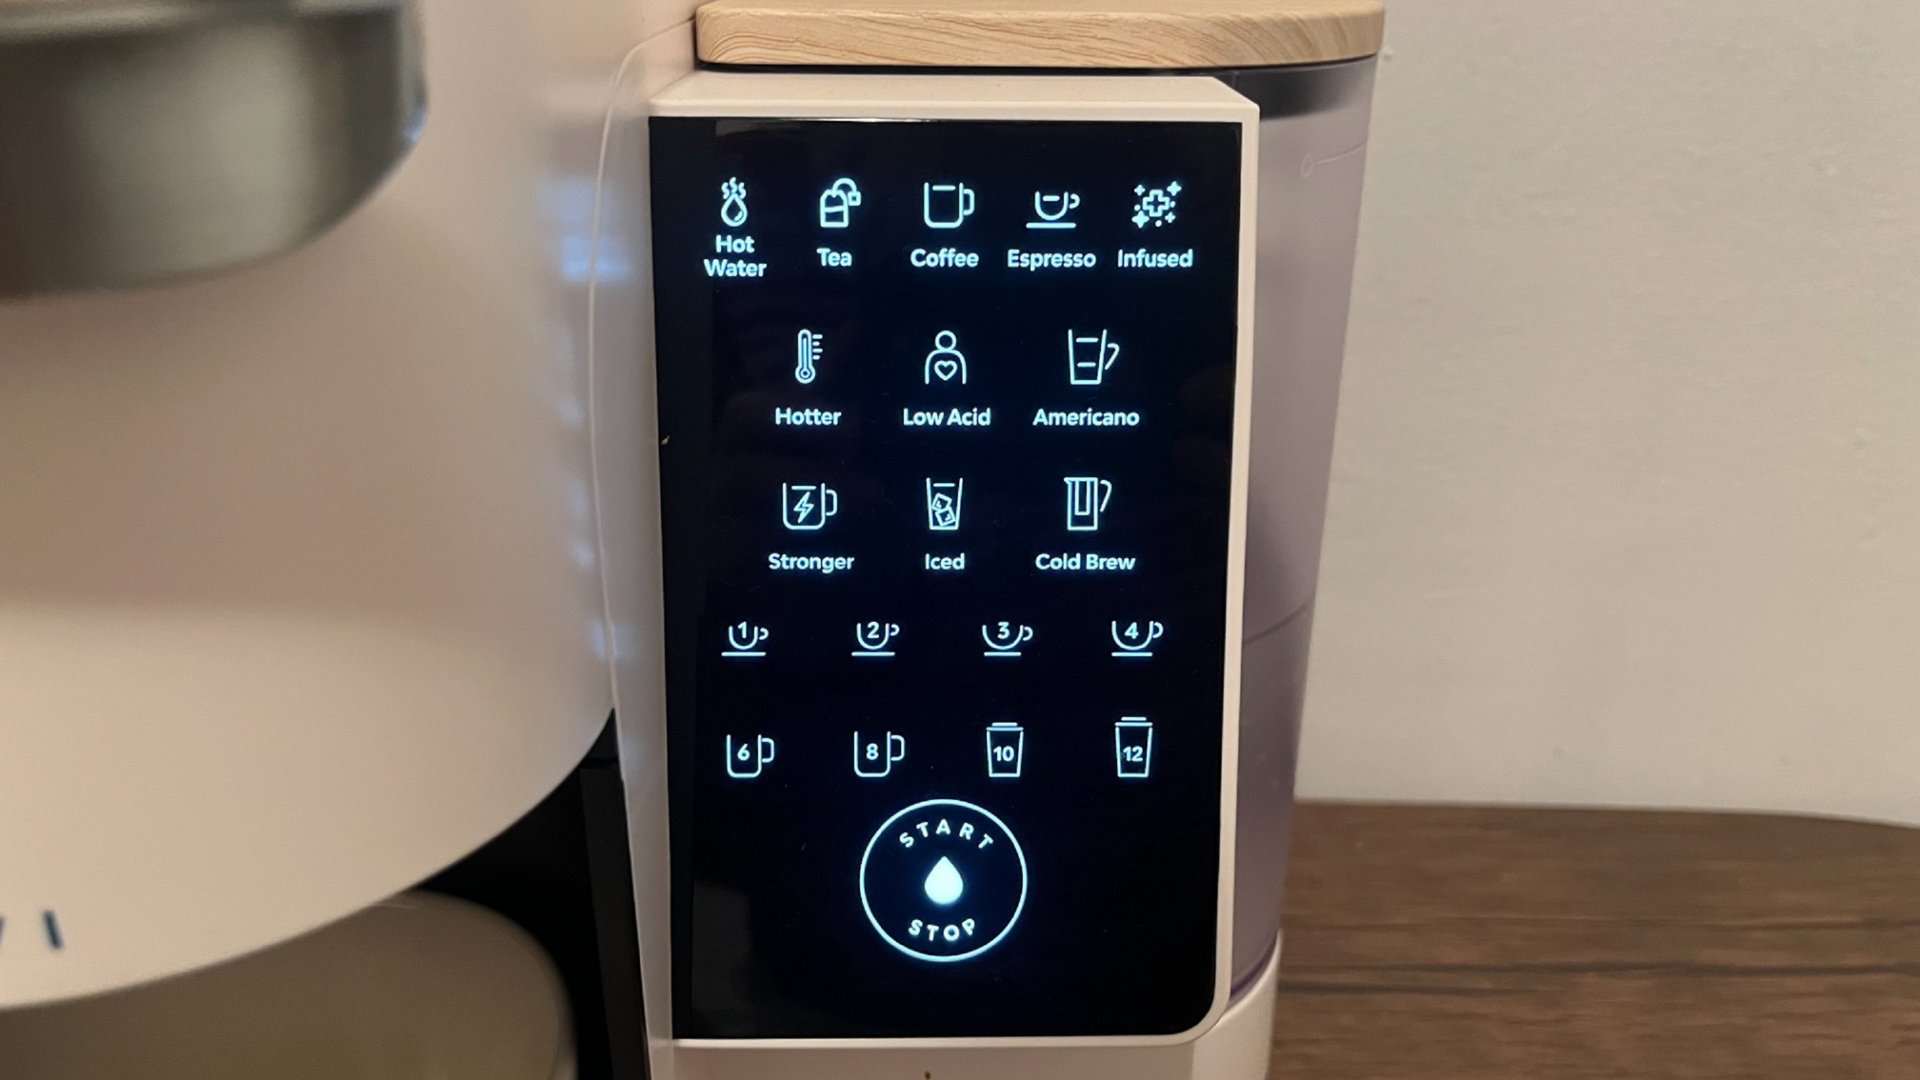 bruvi coffee machine display screen